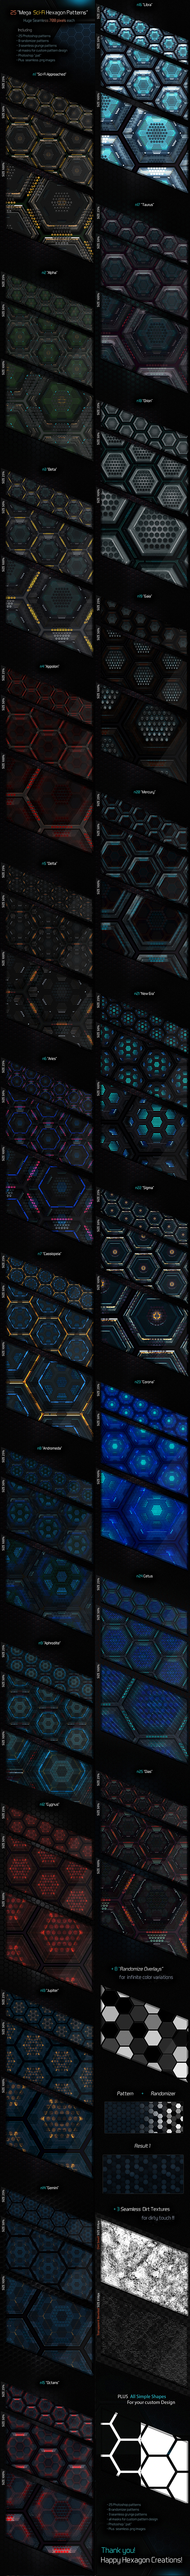 Mega Sci-Fi Hitech Hexagon Patterns